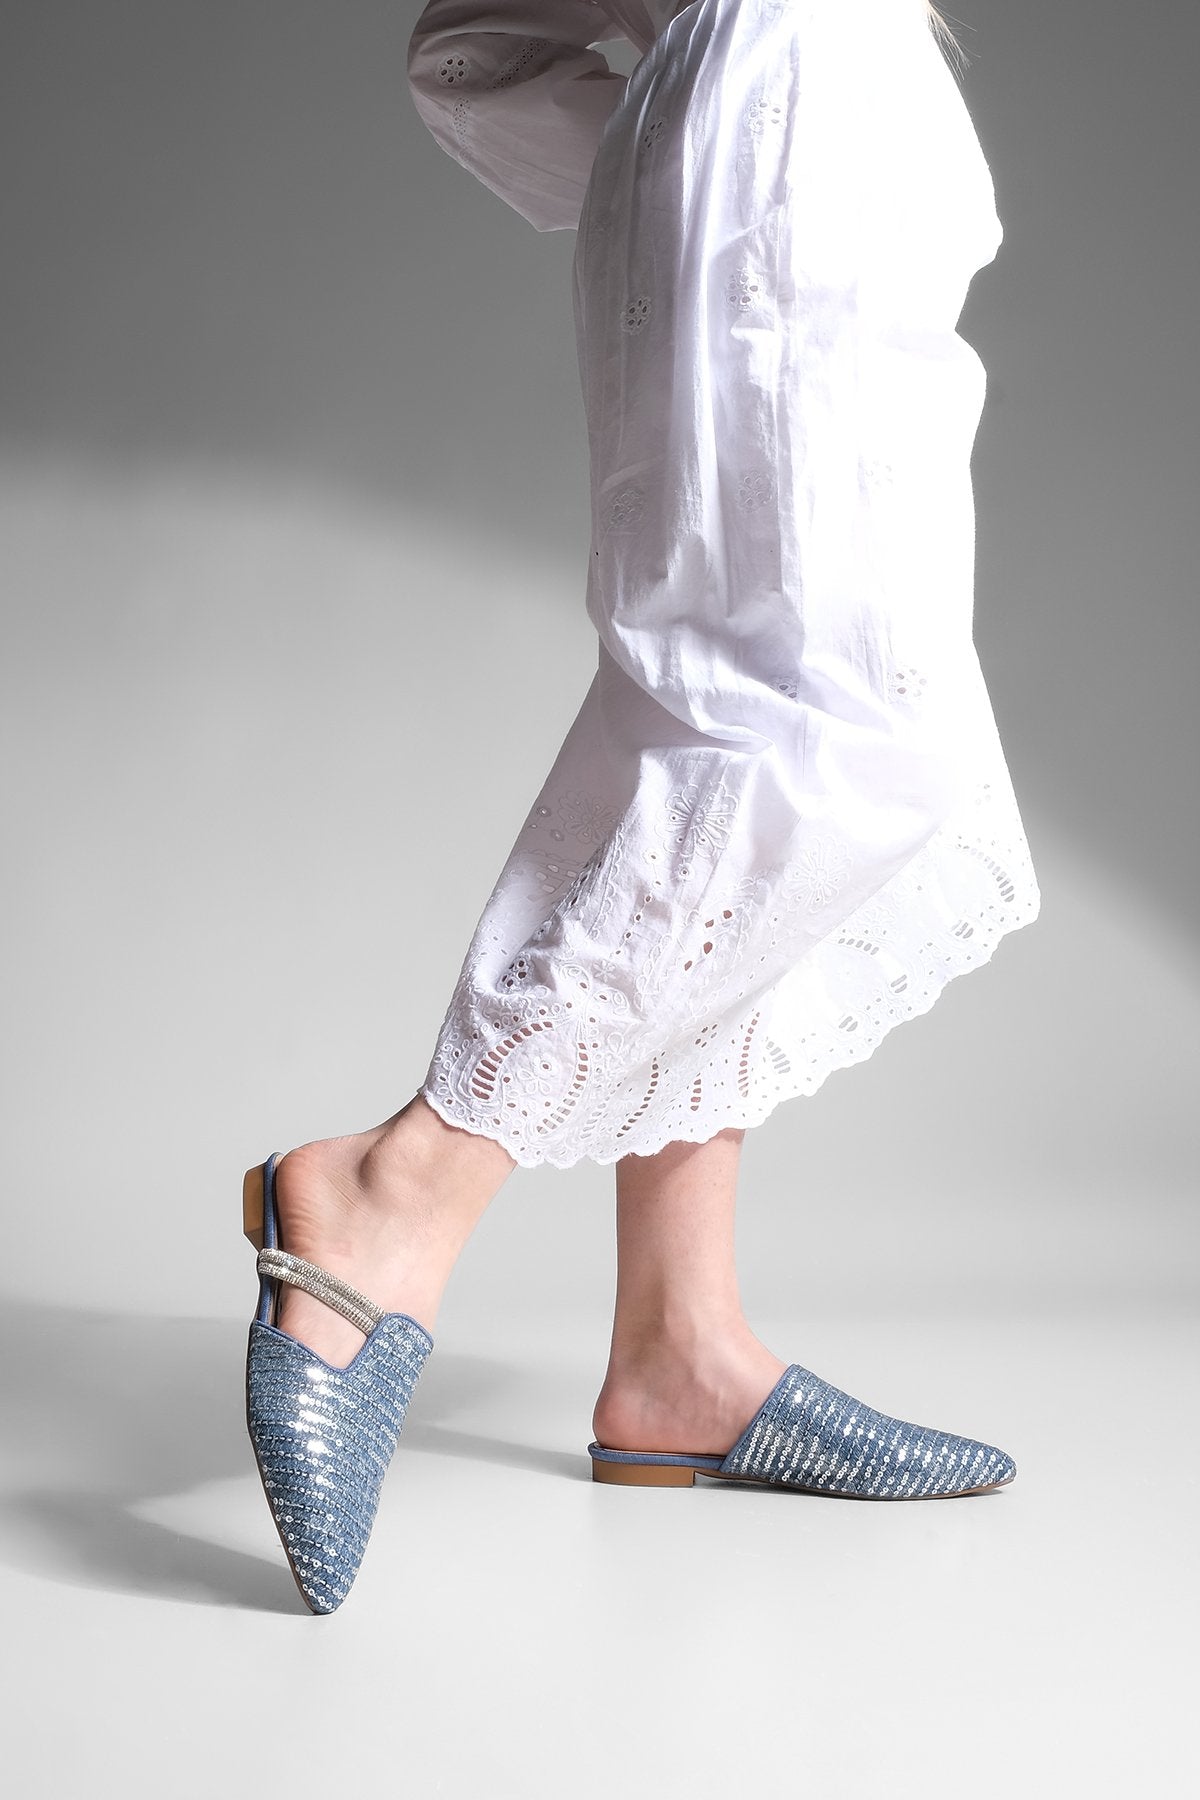 Women's Pointed Toe Casual Slippers Riyas - Blue Denim - Lebbse